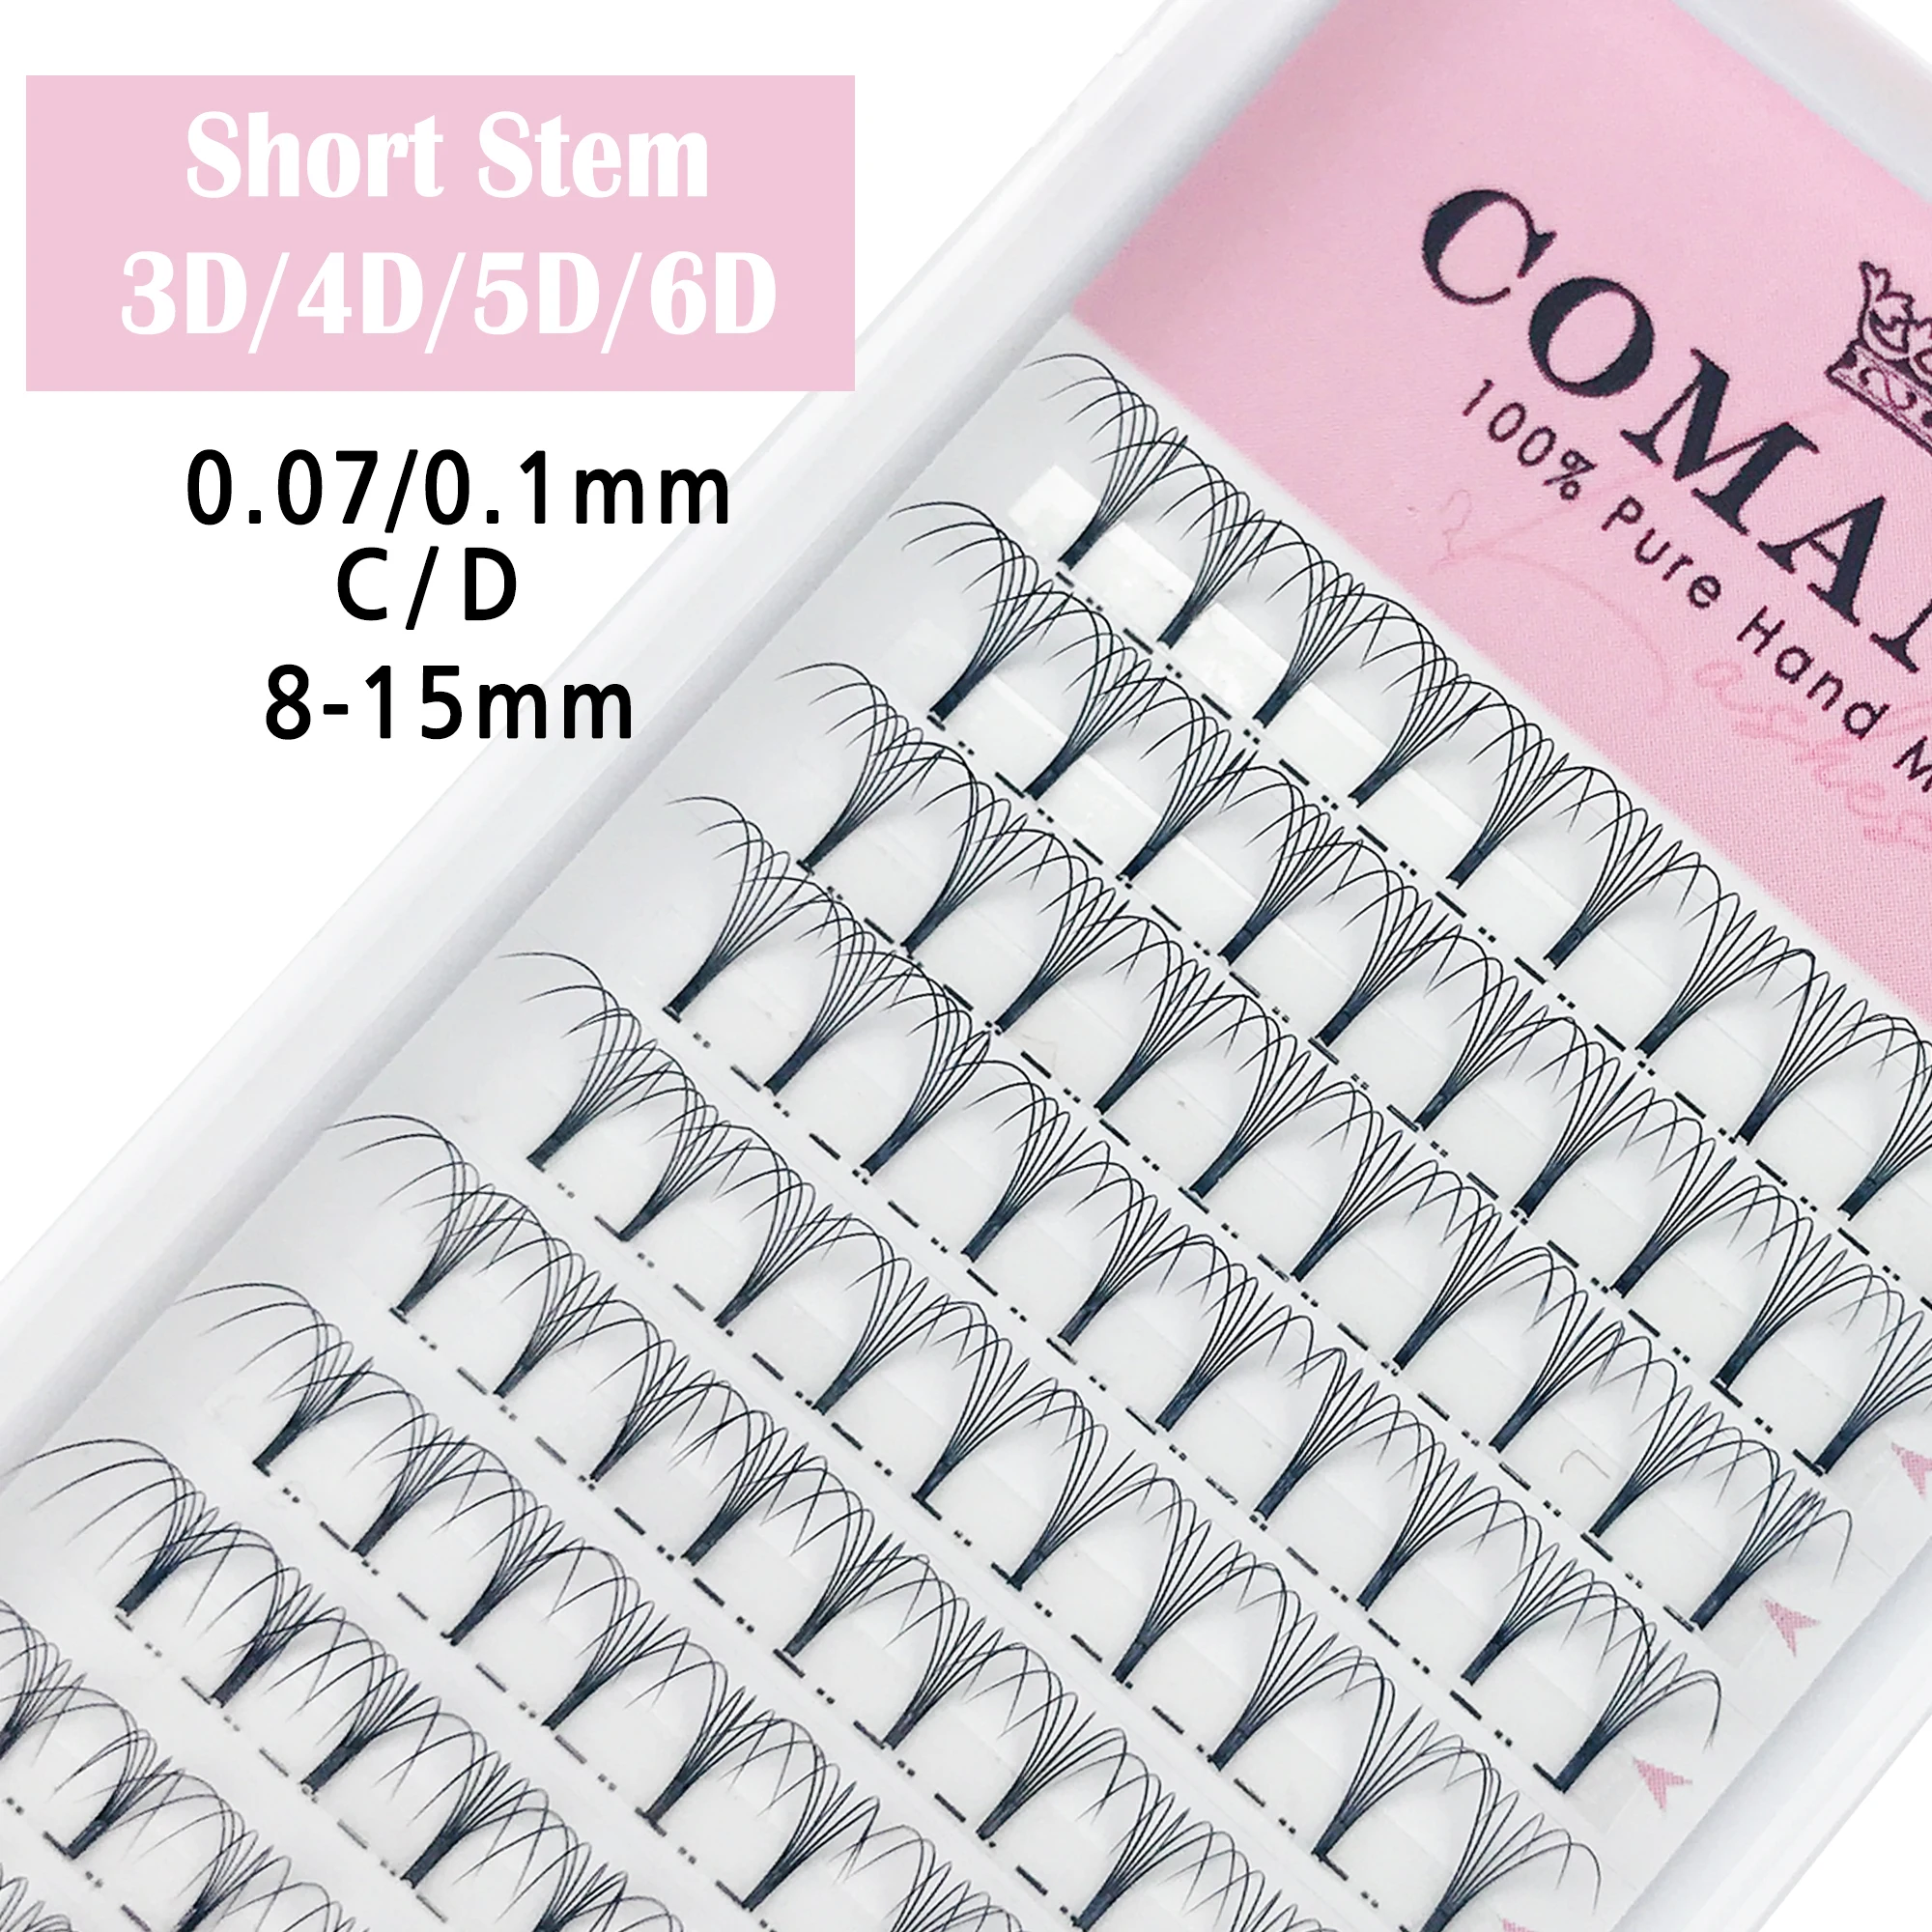 CoMango 3D 4D 5D 6D Short Stem Premade Fans Mixed Length C/D Curl Mink Lash Eyelash Individual Extensions